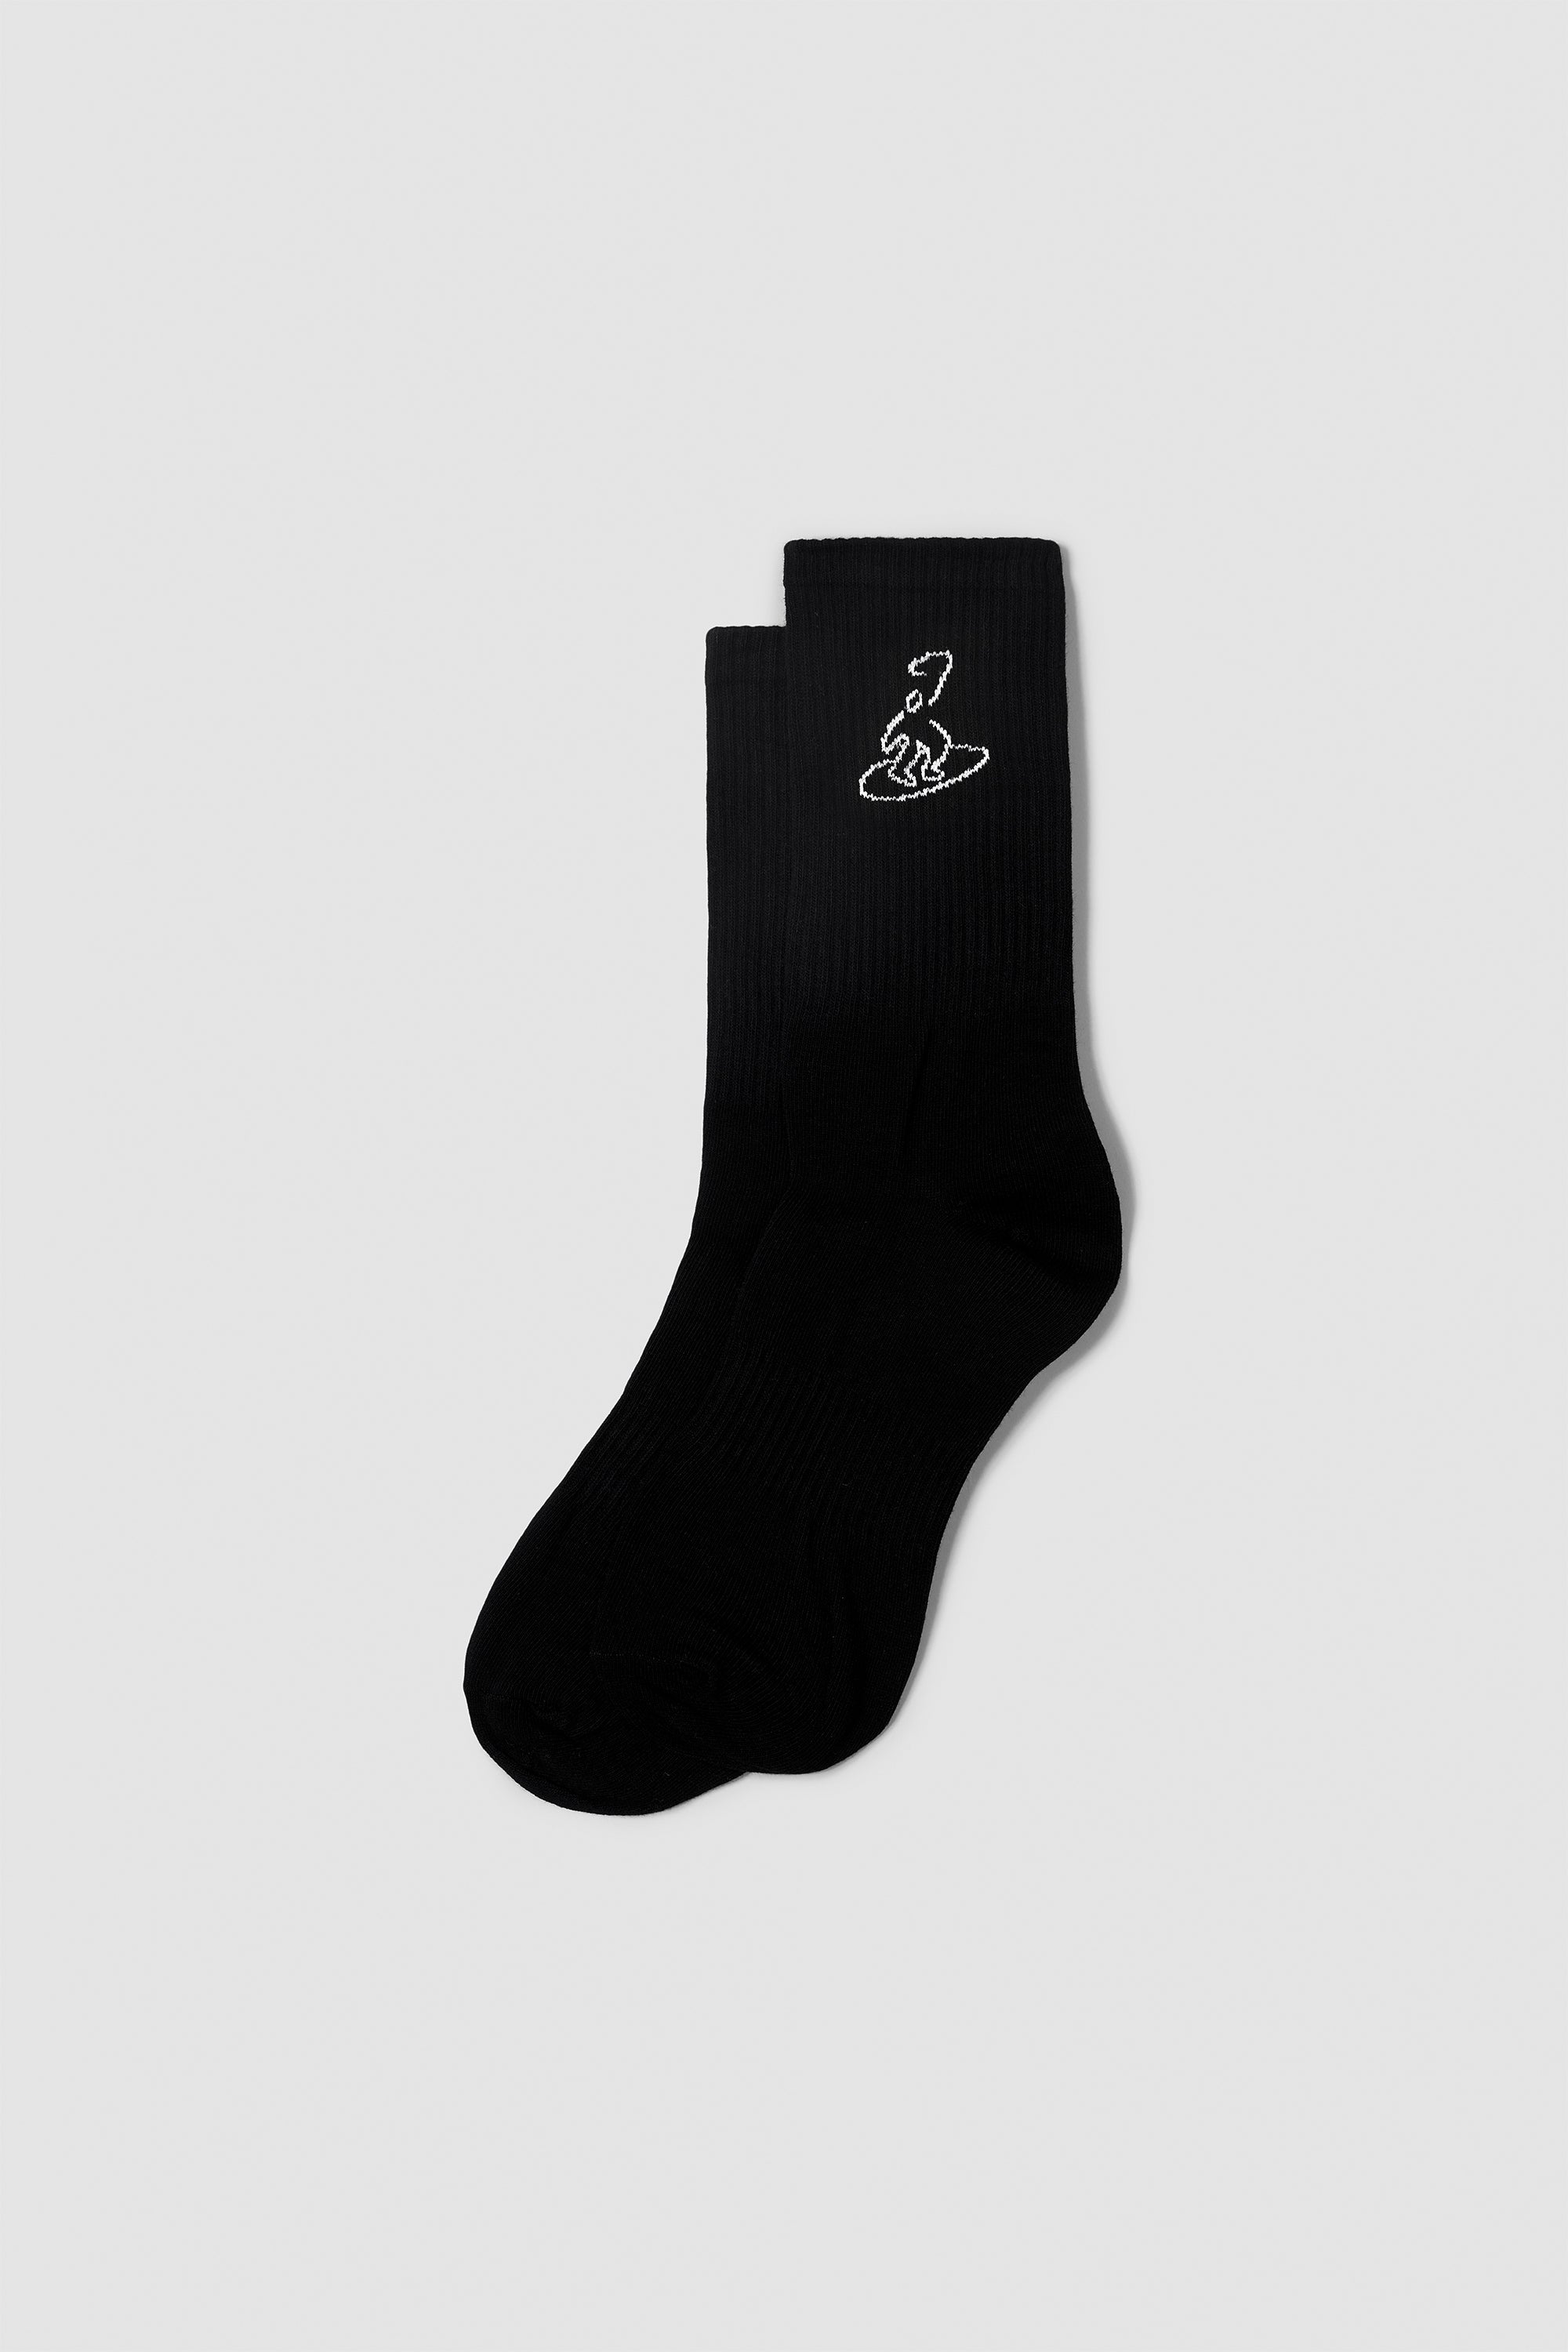 Surf Sock - Black